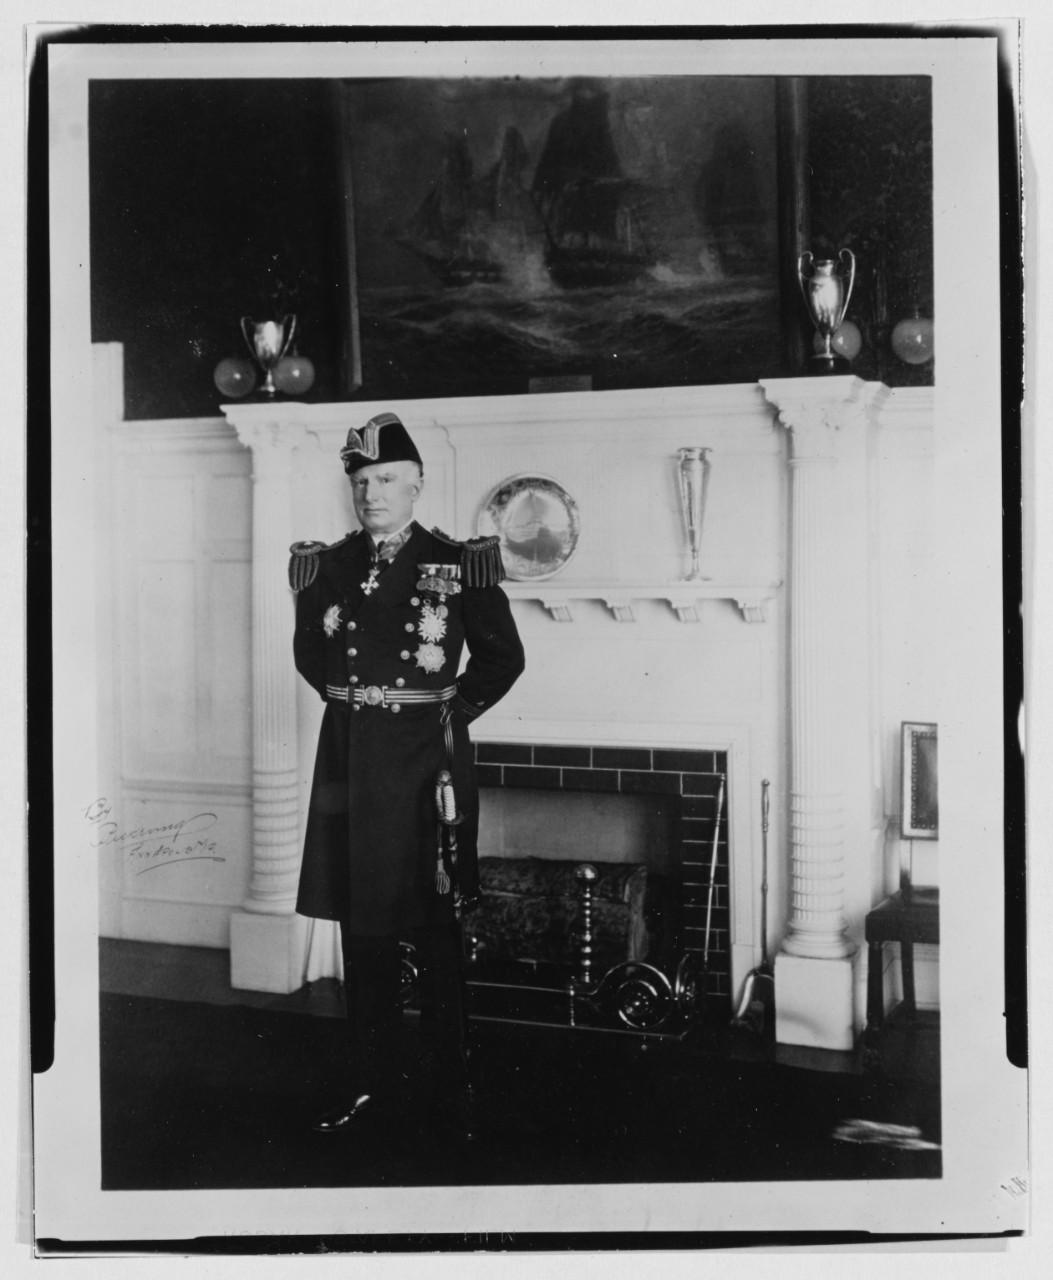 Autographed photograph of Henry B. Wilson, RADM, Superintendent of Navy Academy -1924-1925.